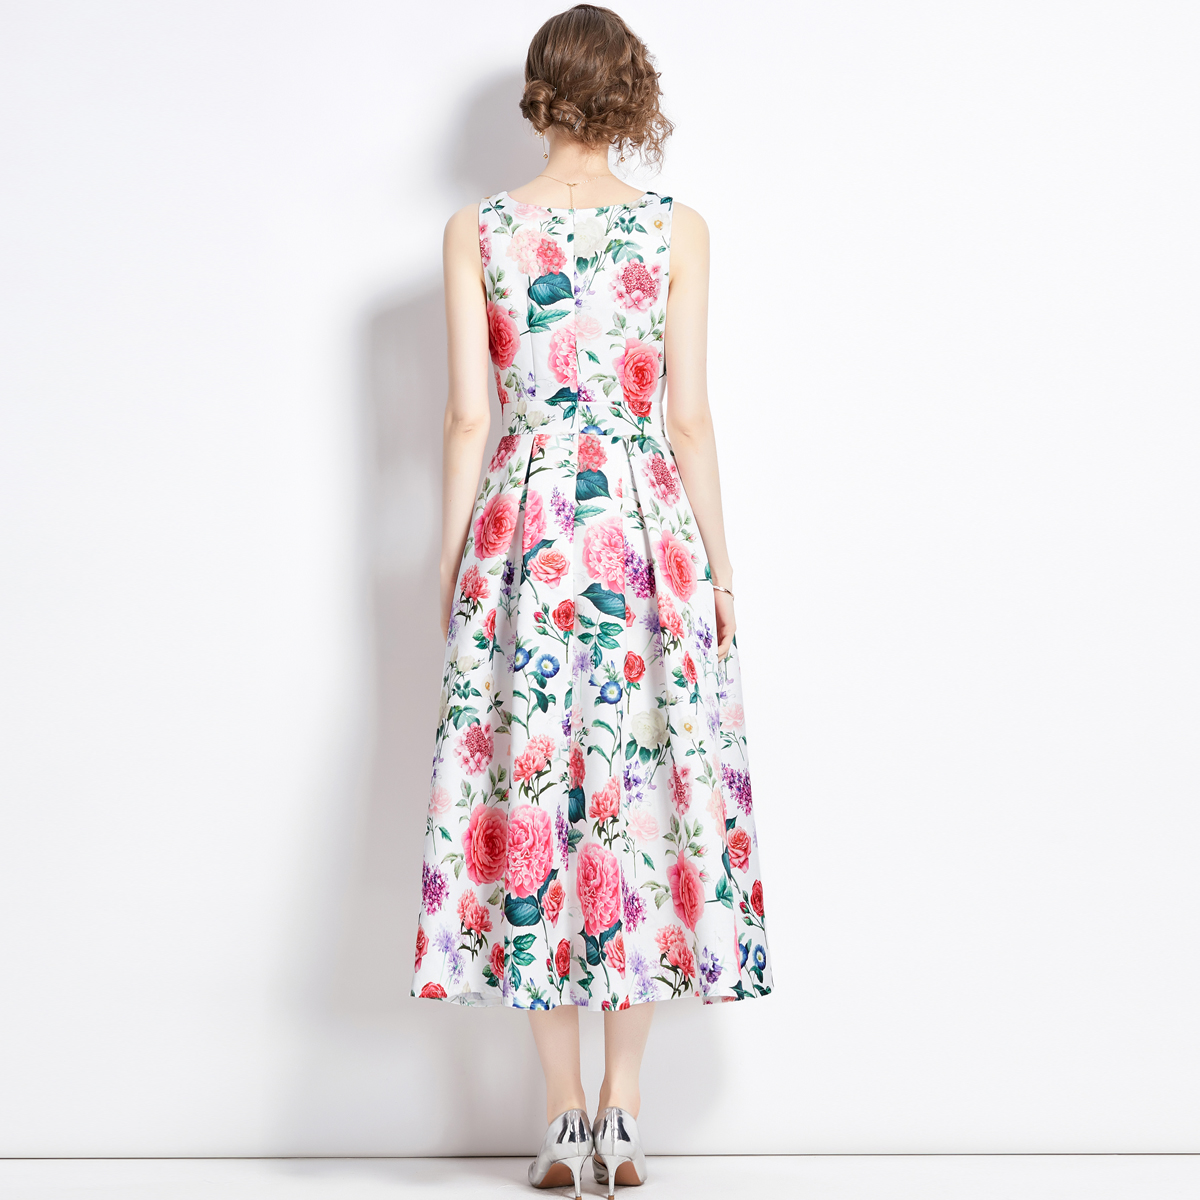 Clipping sleeveless stereoscopic pinched waist summer dress